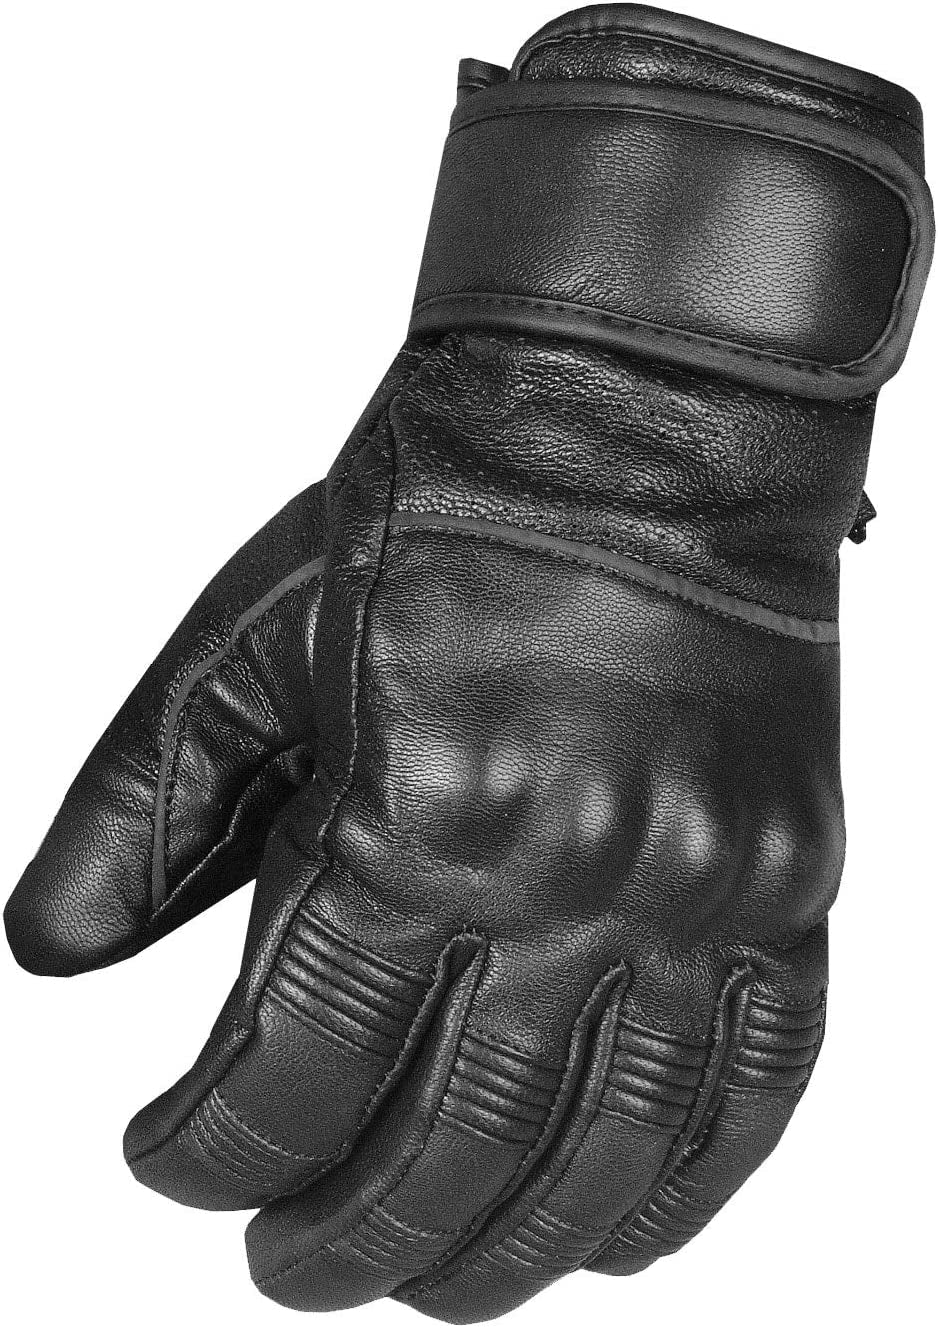 Men'S Motorcycle Premium Leather Gel Padded Palm Street Cruiser Protected Biker Gloves